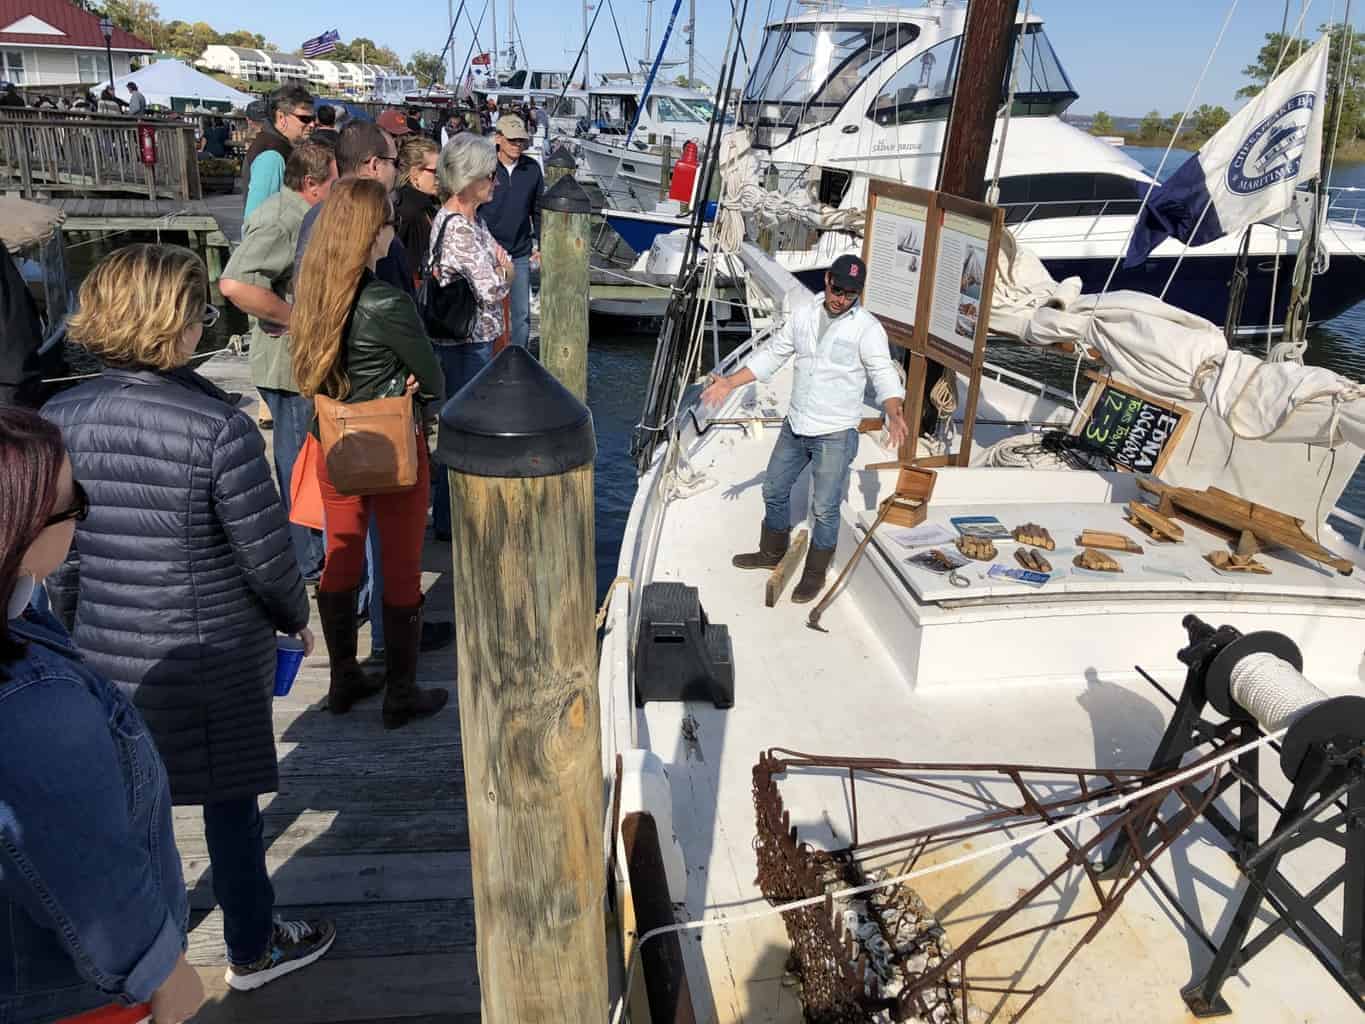 SLIDESHOW Urbanna Oyster Festival 62 Years Strong Chesapeake Bay